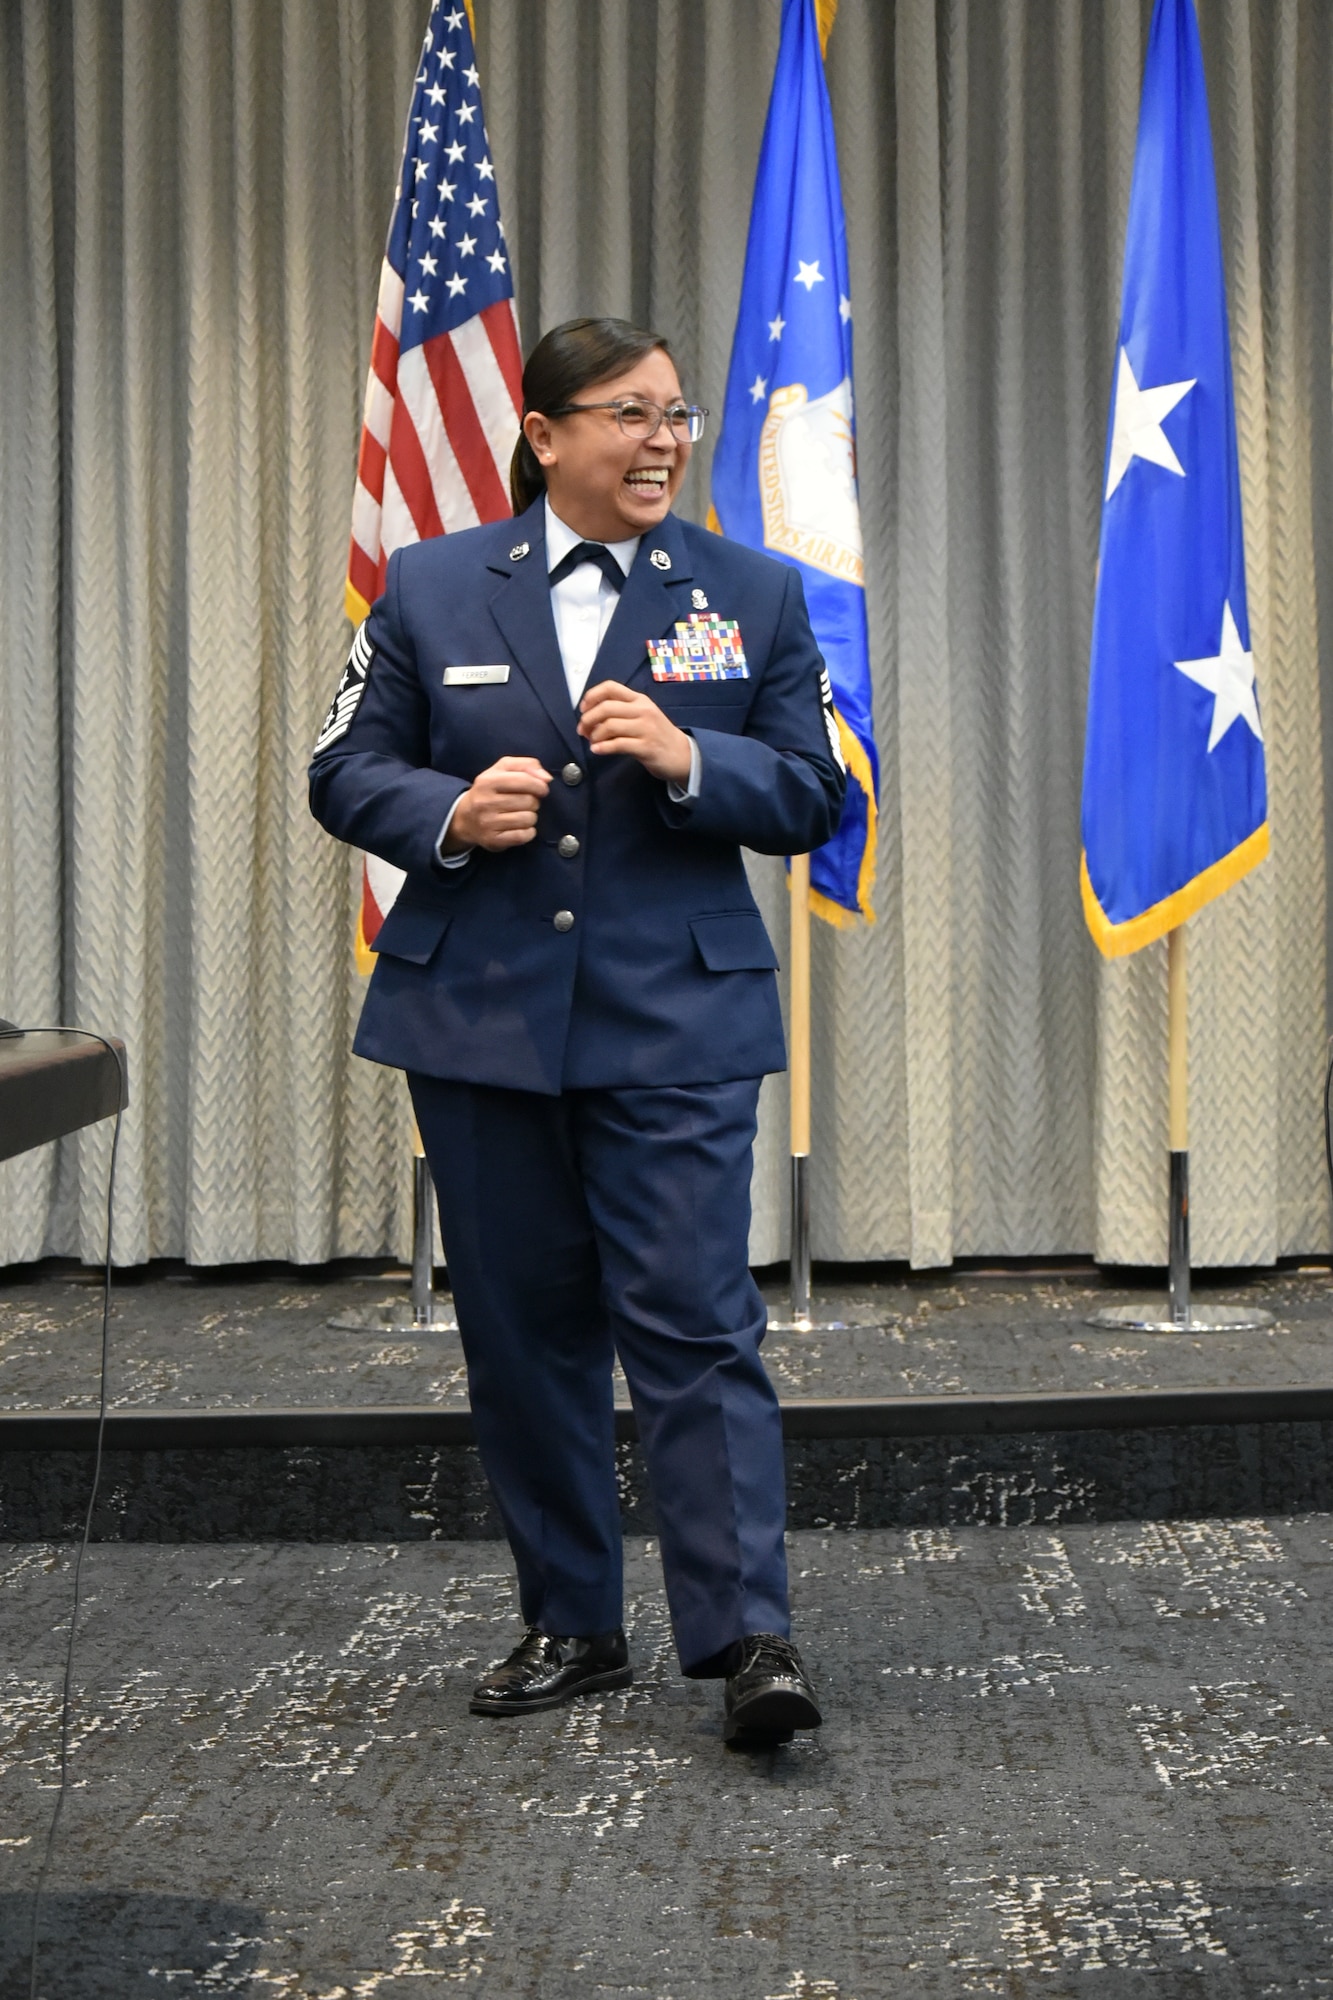 Command Chief Master Sgt. Maribeth O. Ferrer speaks